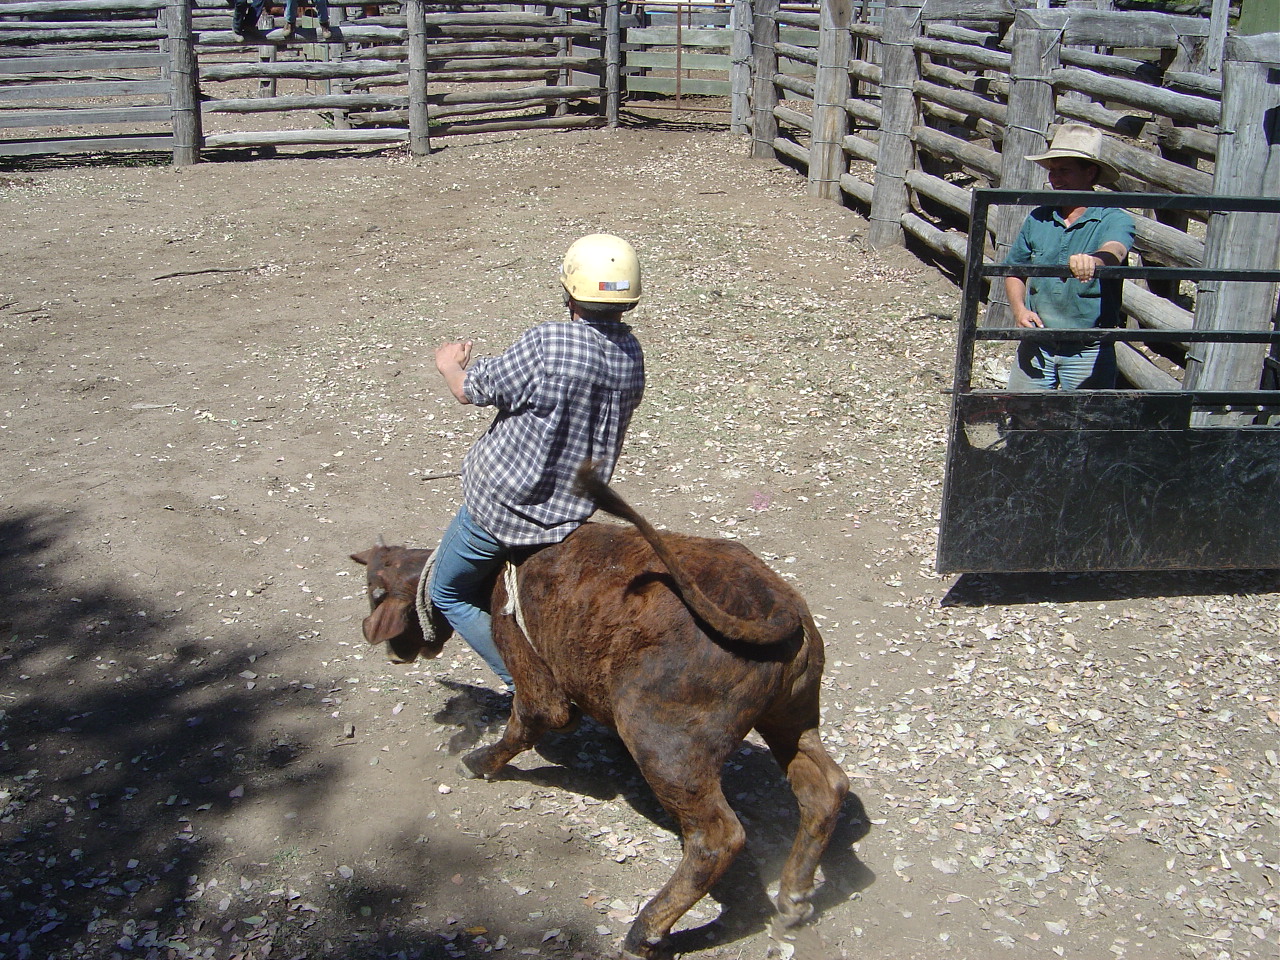 Donal rides the calf